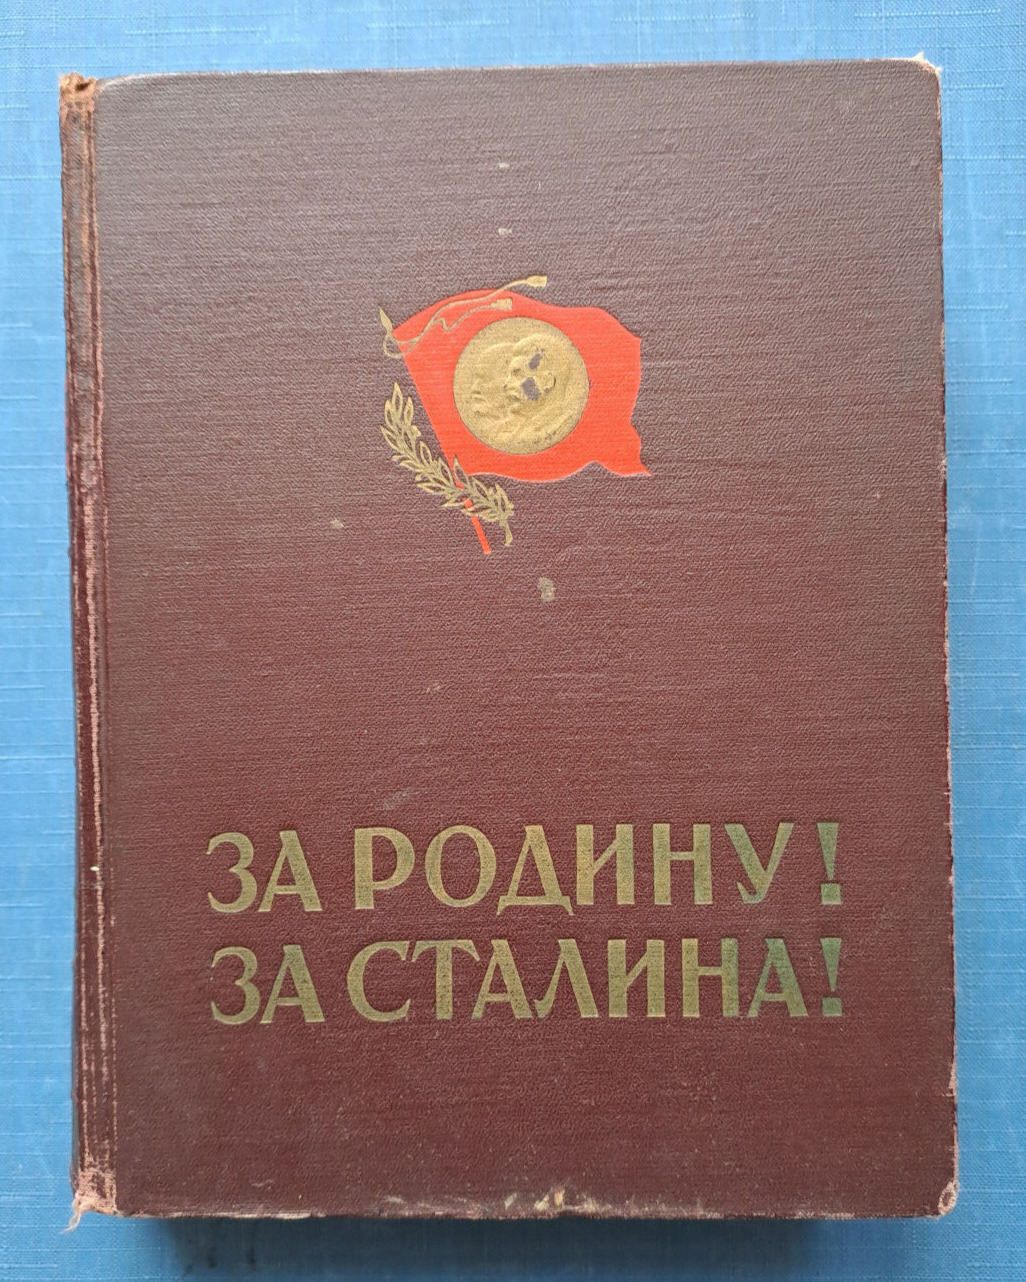 1951 For Homeland For Stalin WWII Propaganda Komsomol Stalingrad Russian book